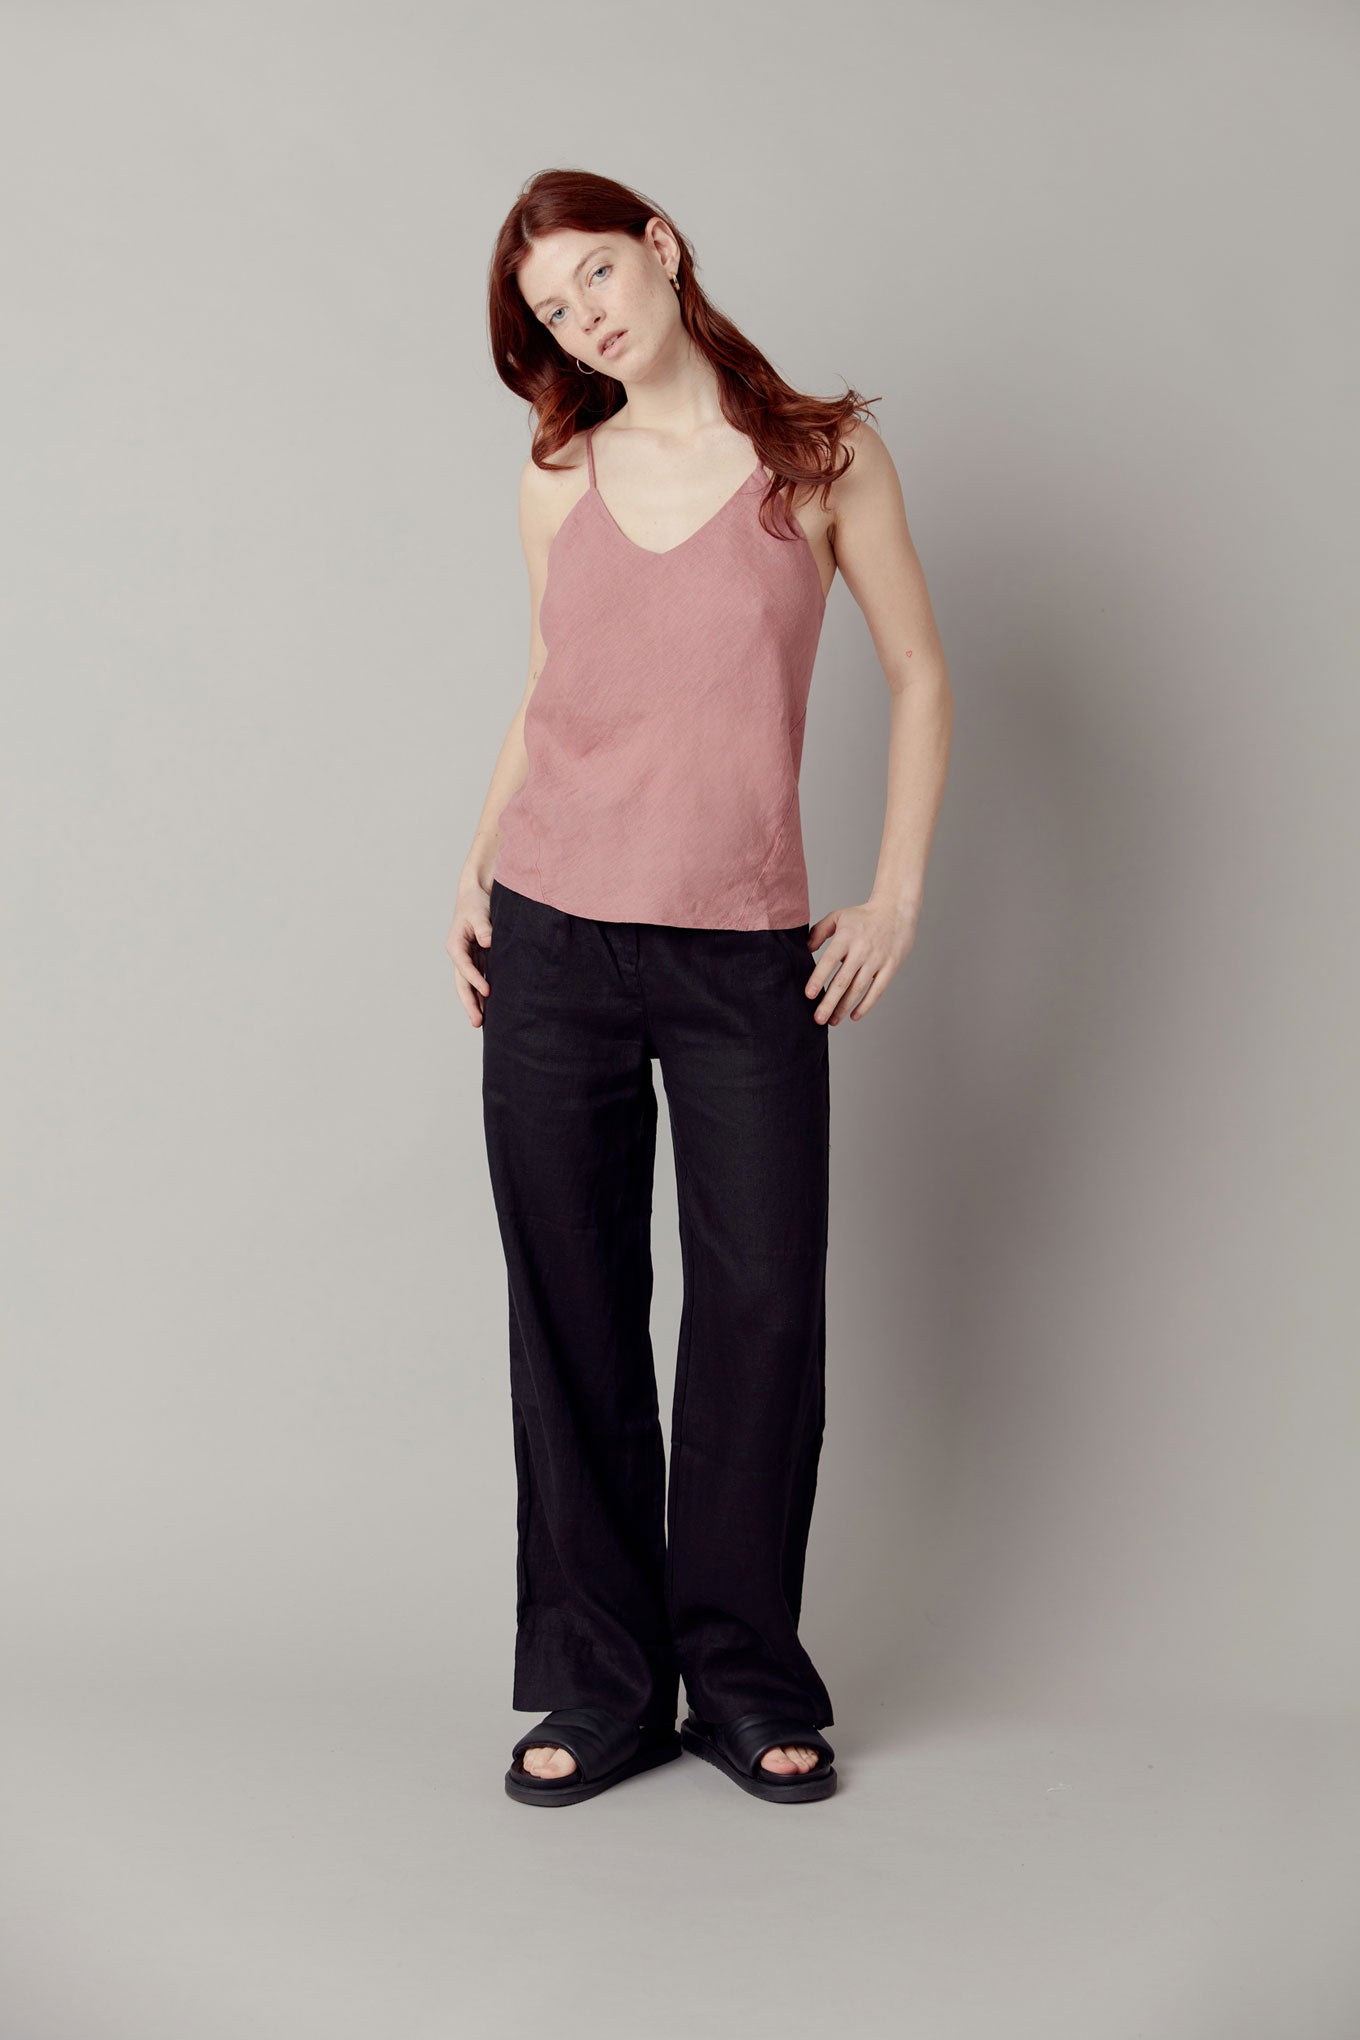 Linen Clothing for Women | Linen Trousers, Shirts & Tops | Bonmarché